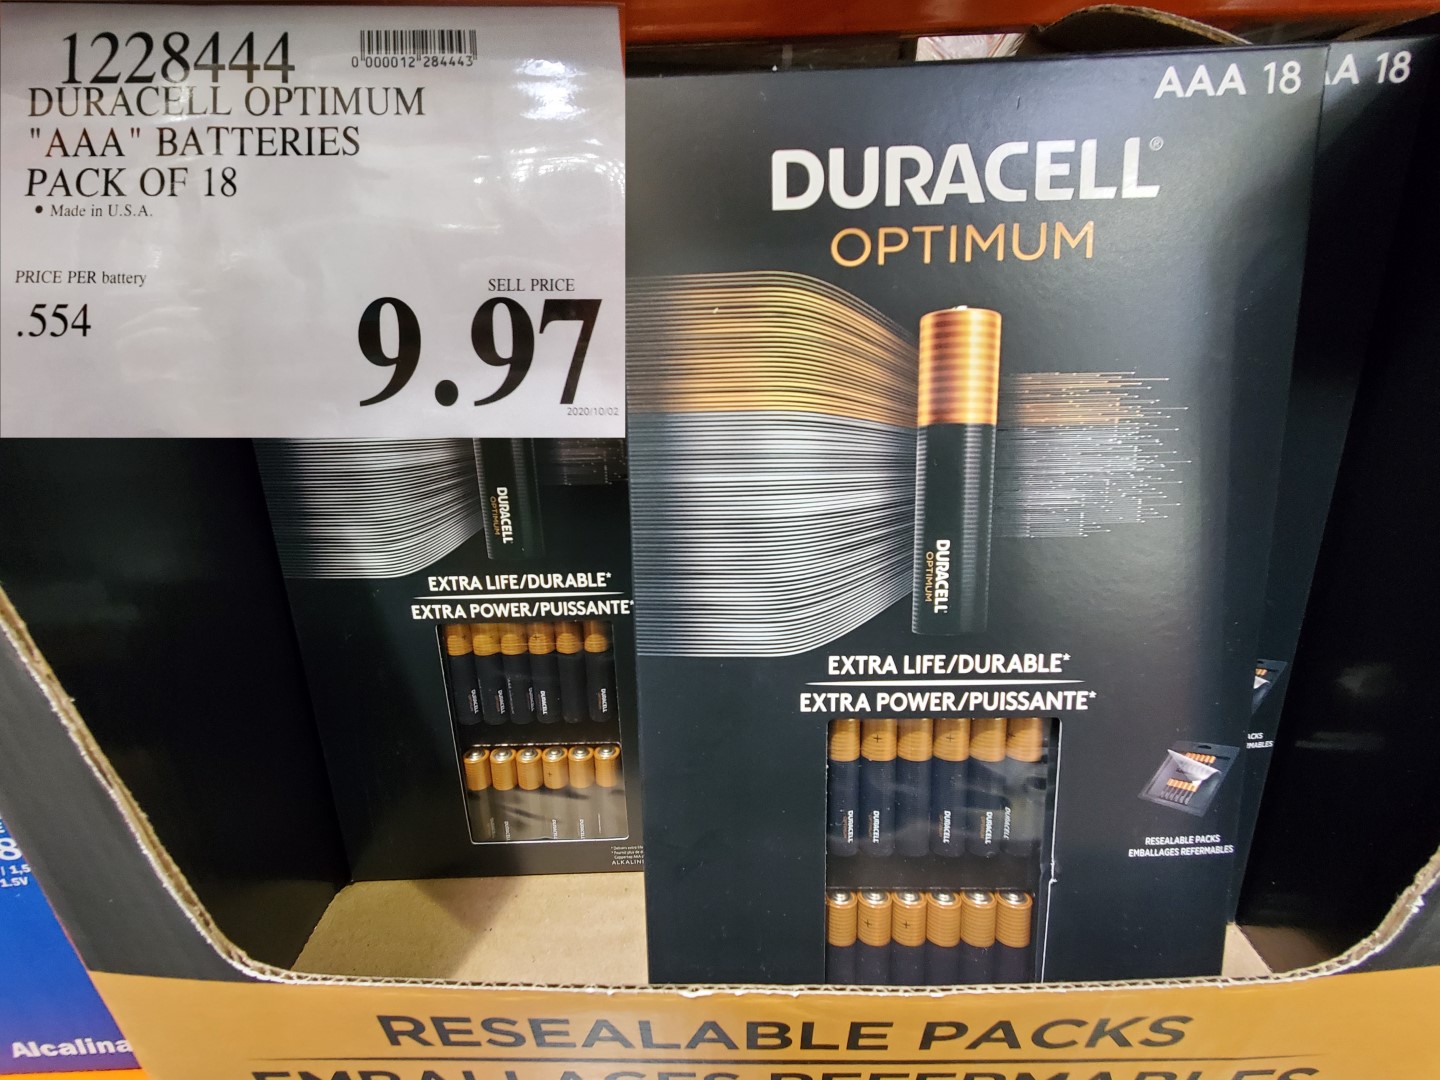 duracell AAA batteries